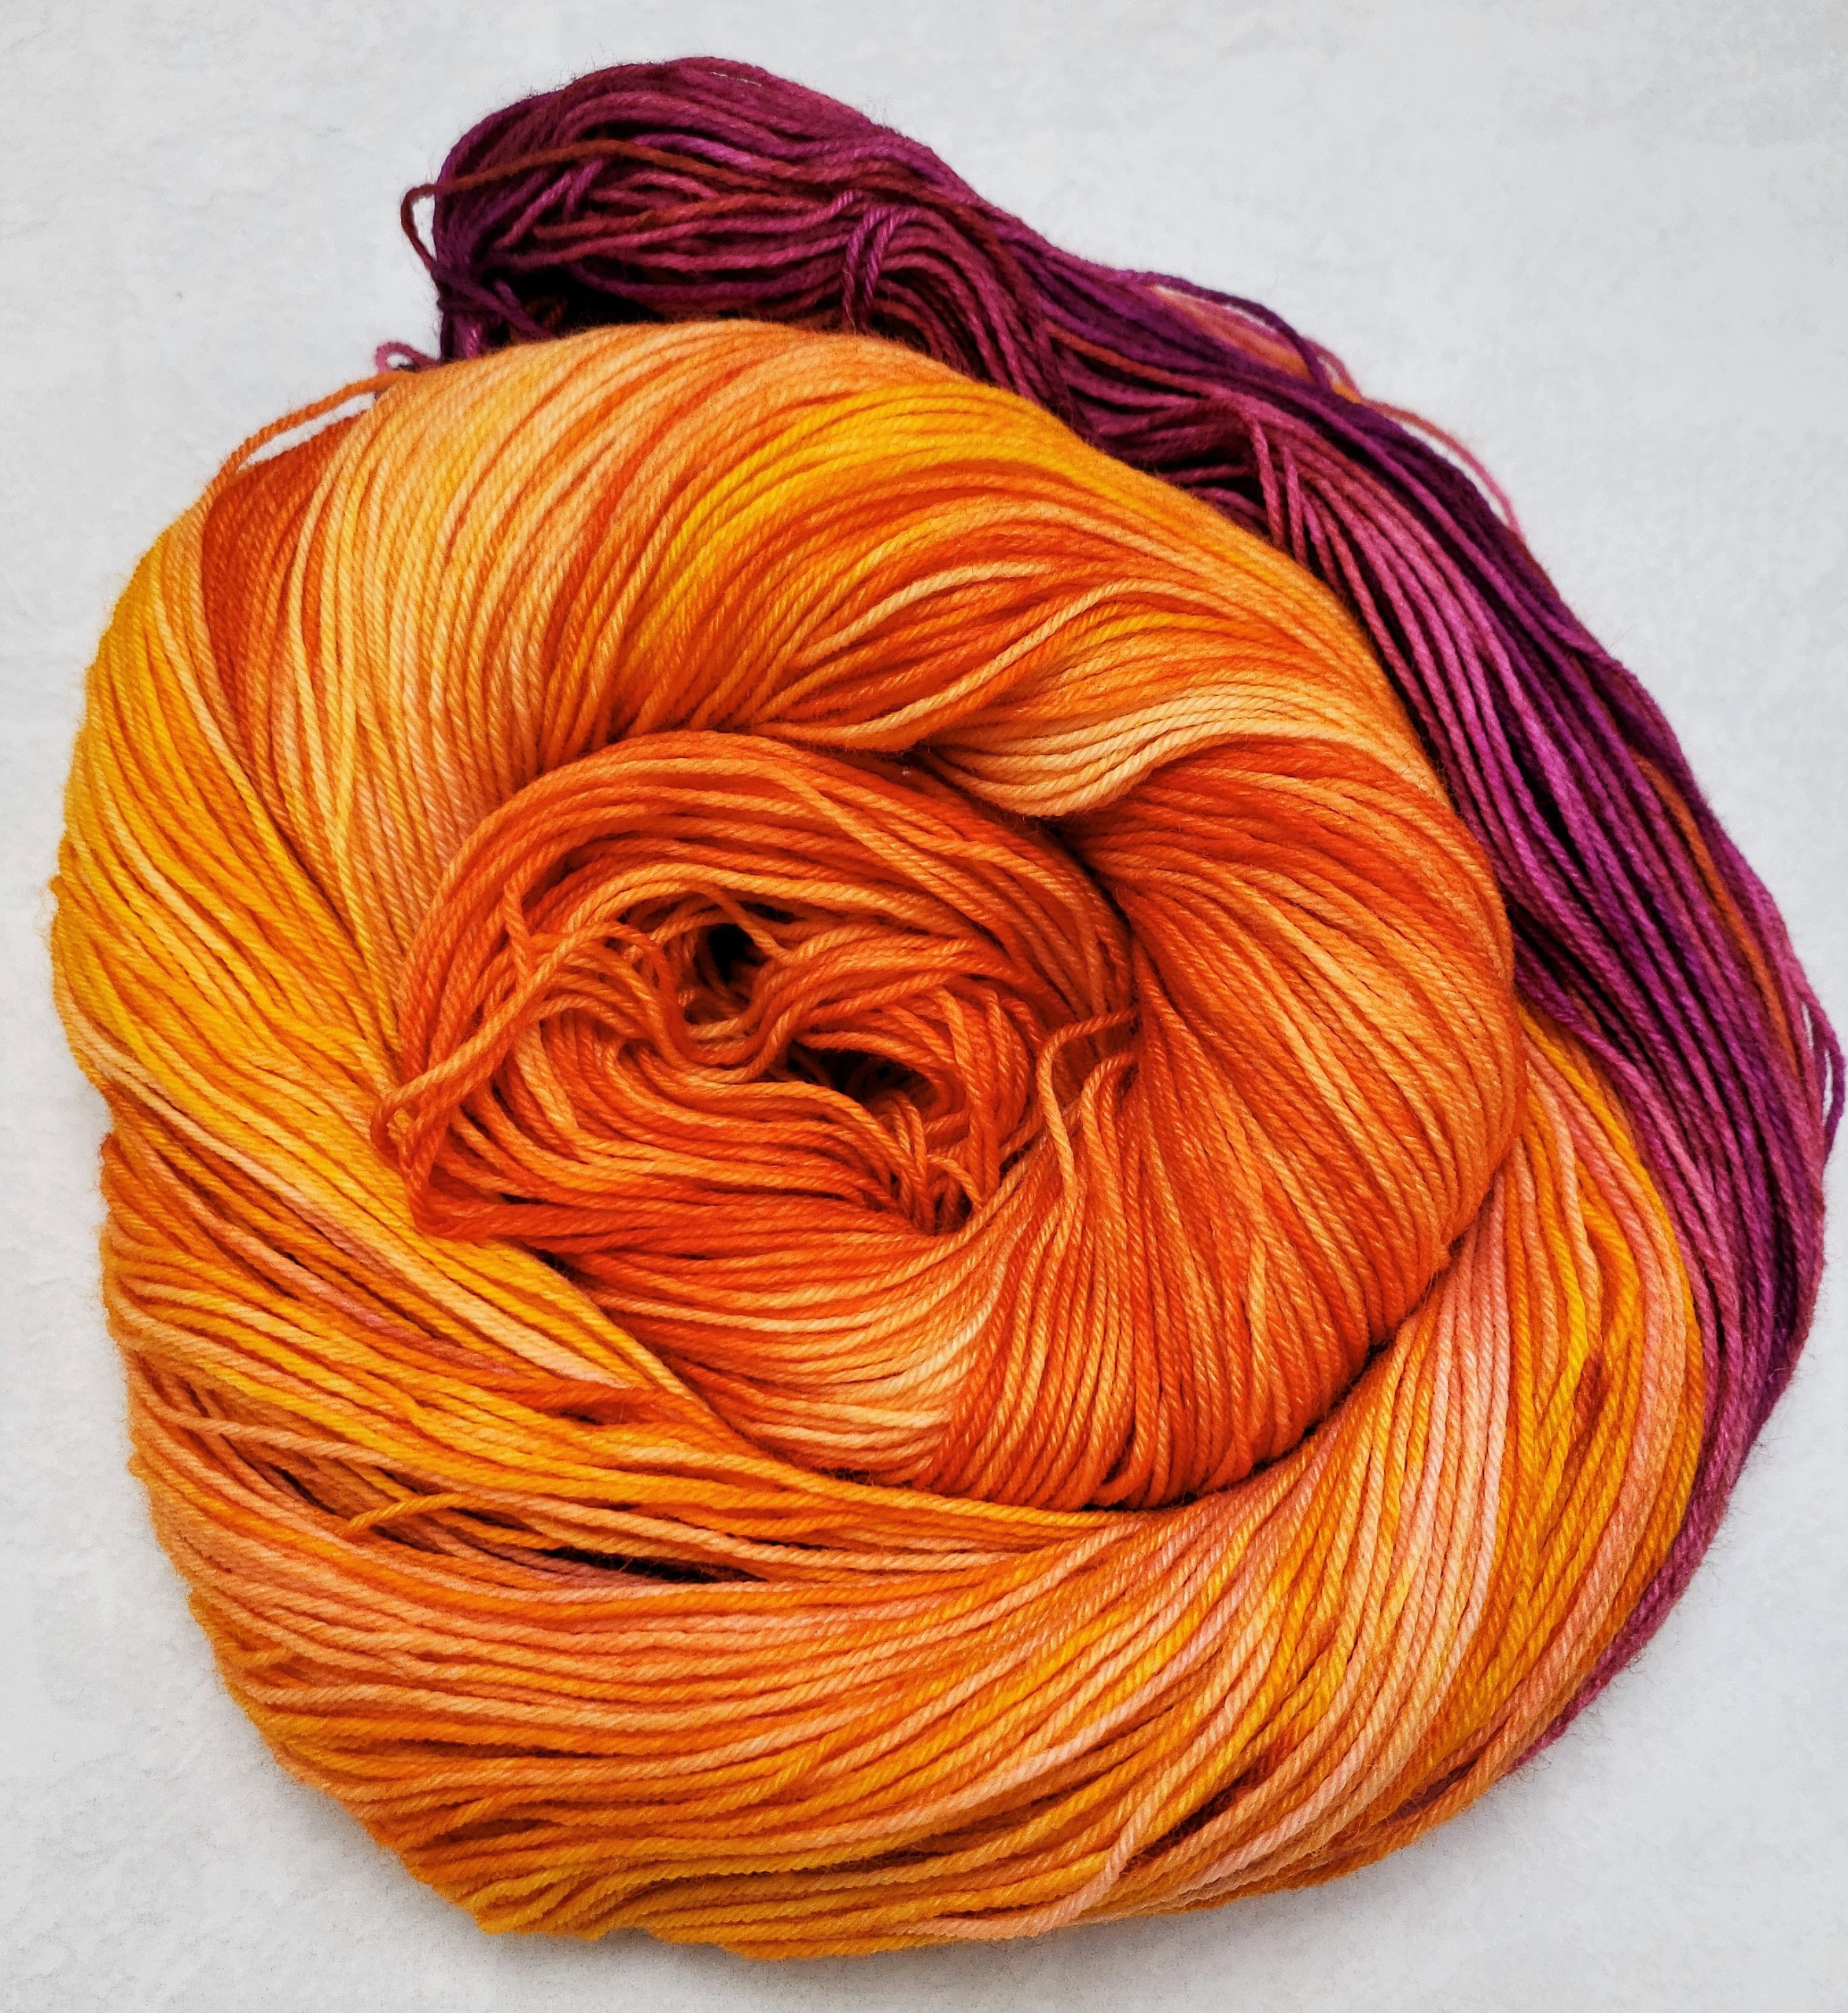 Flounce 17 Variegated, Multicolored Yarn 